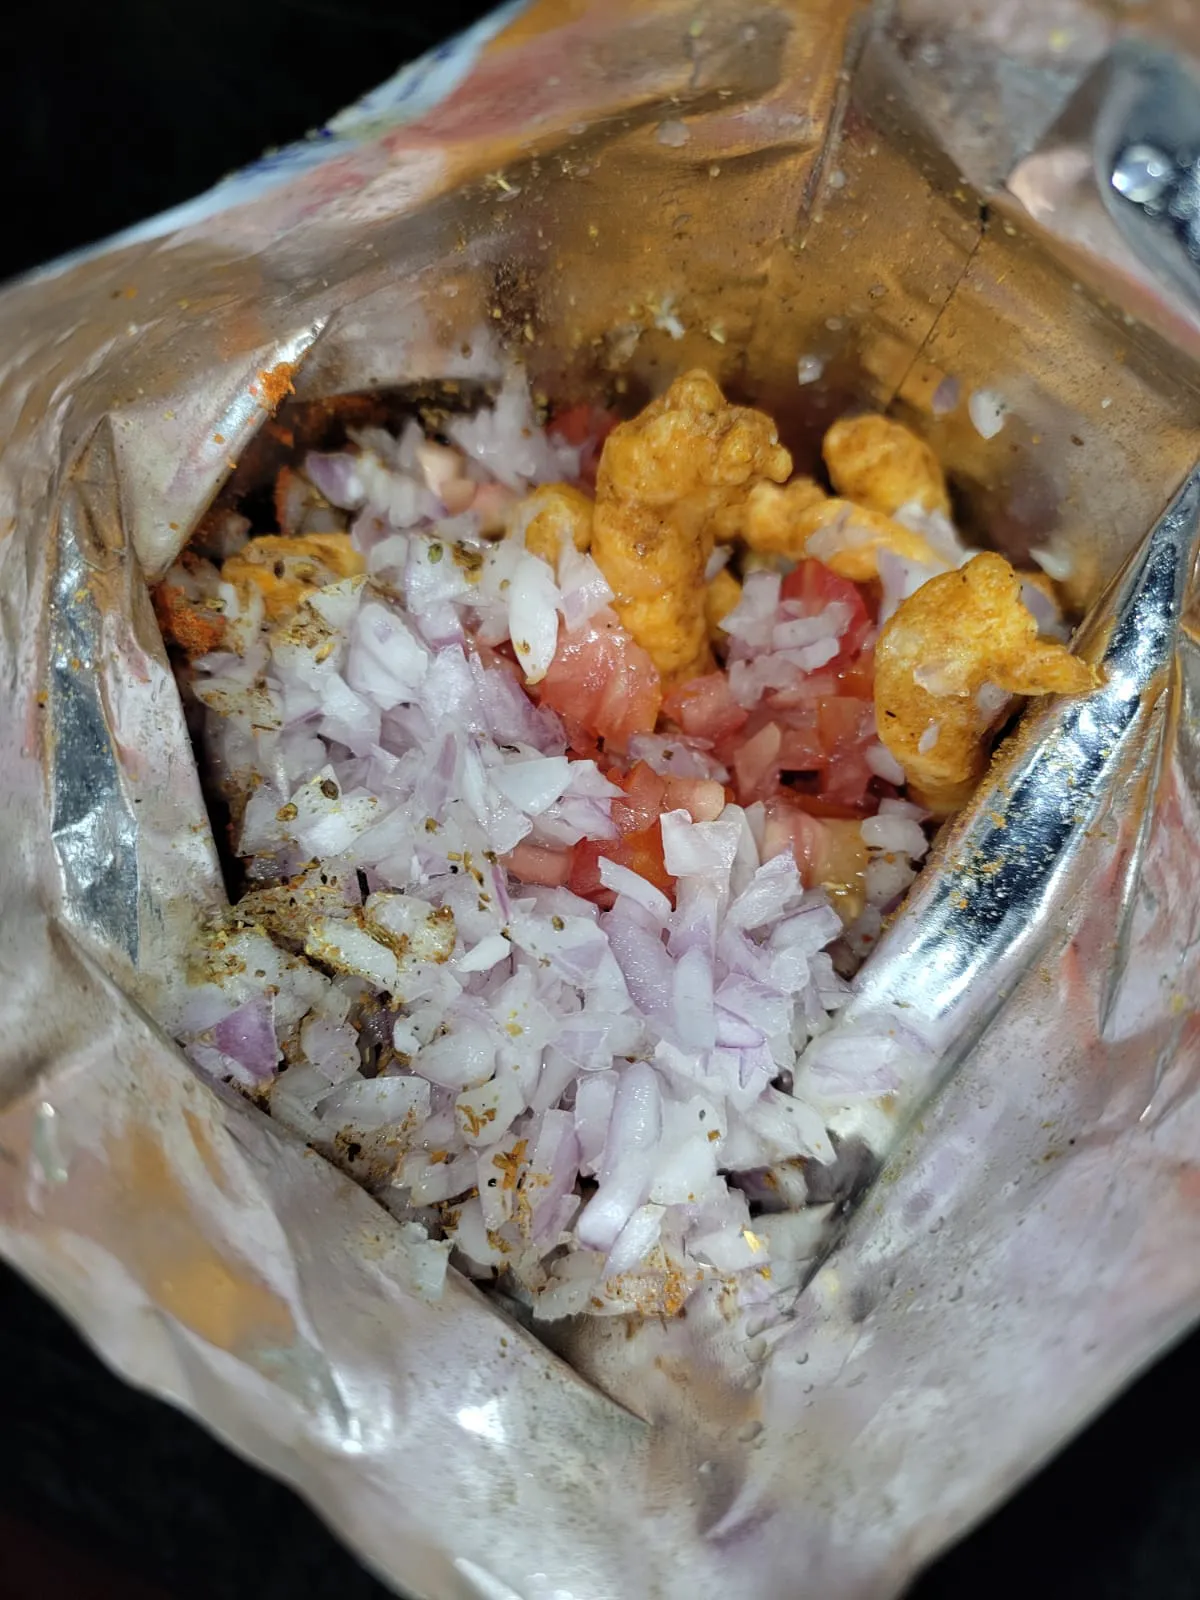 Adding all ingredients for kurkure masala snack